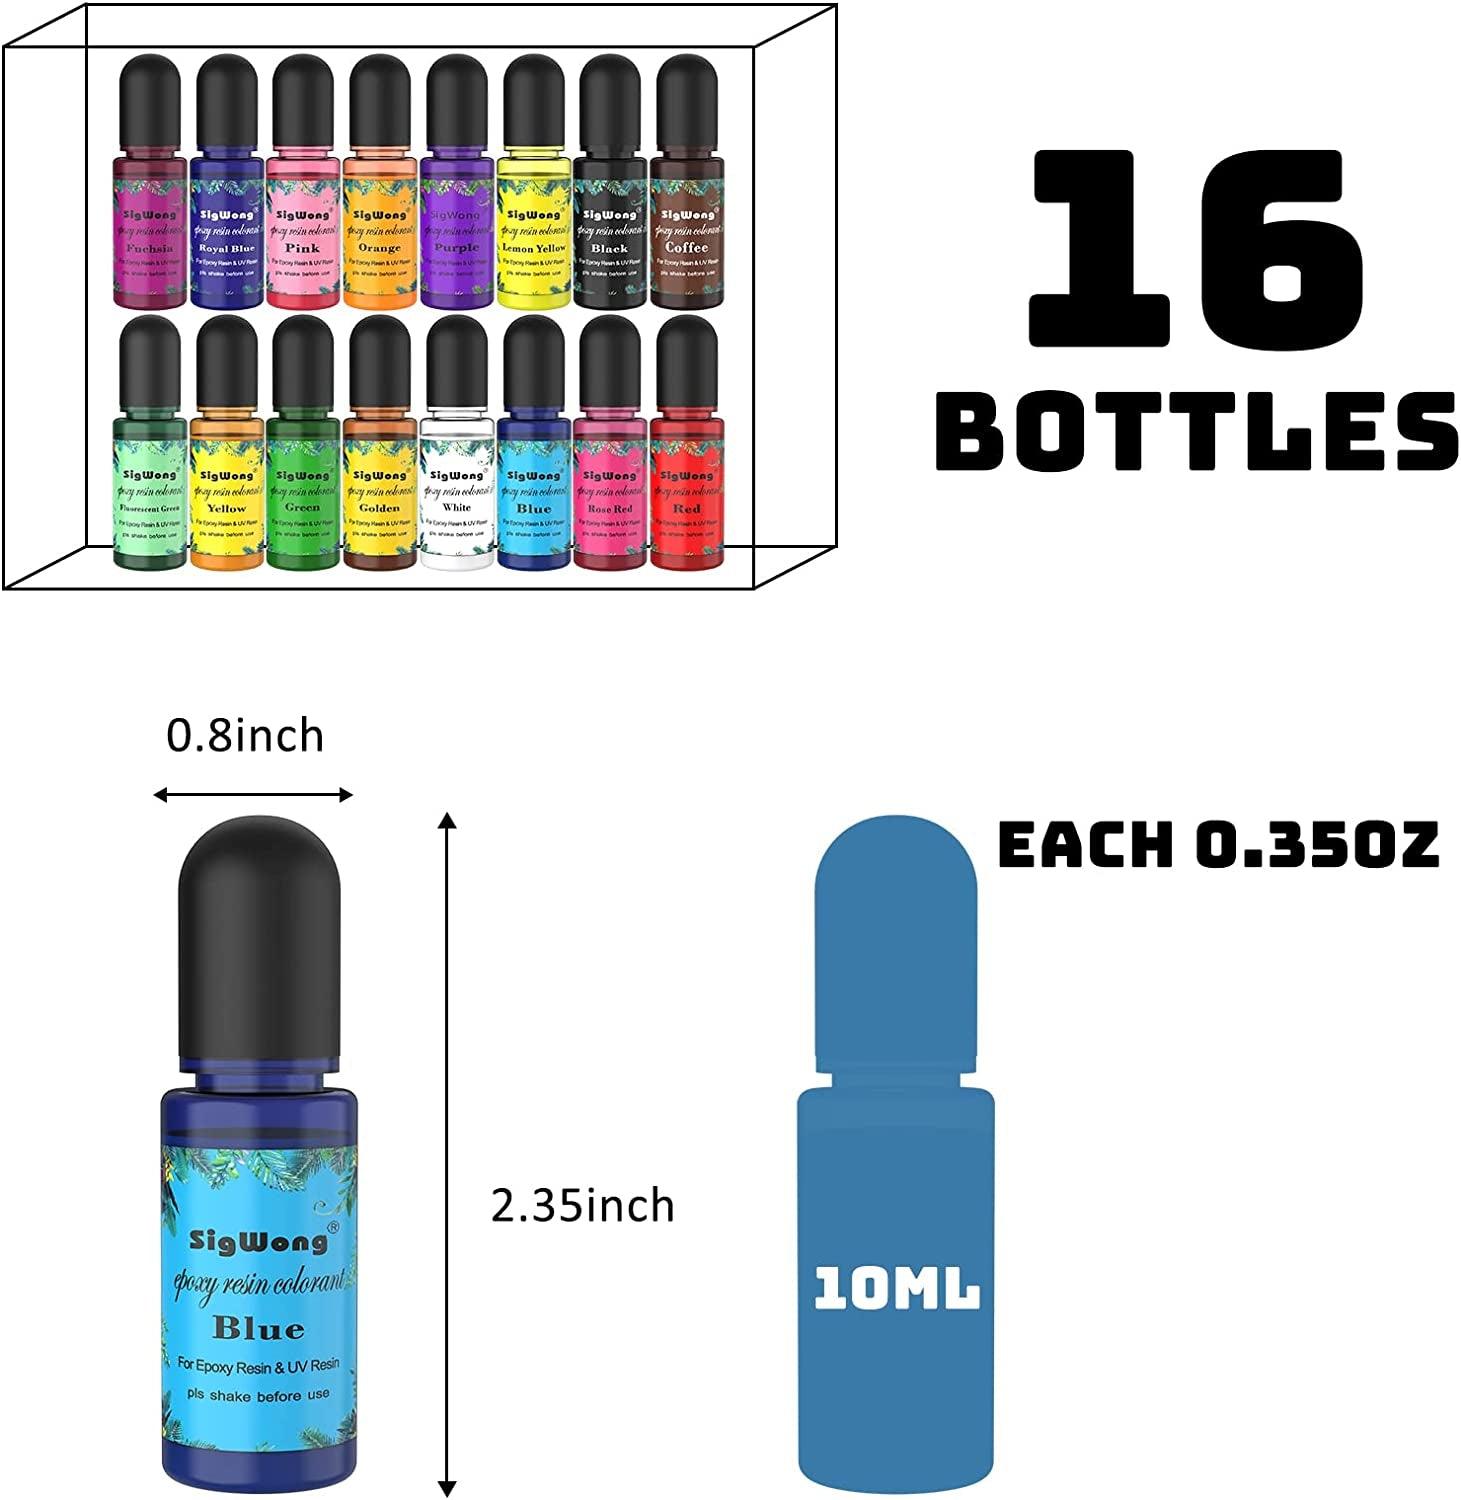  24 Color Epoxy UV Resin Pigment - Crystal Transparent